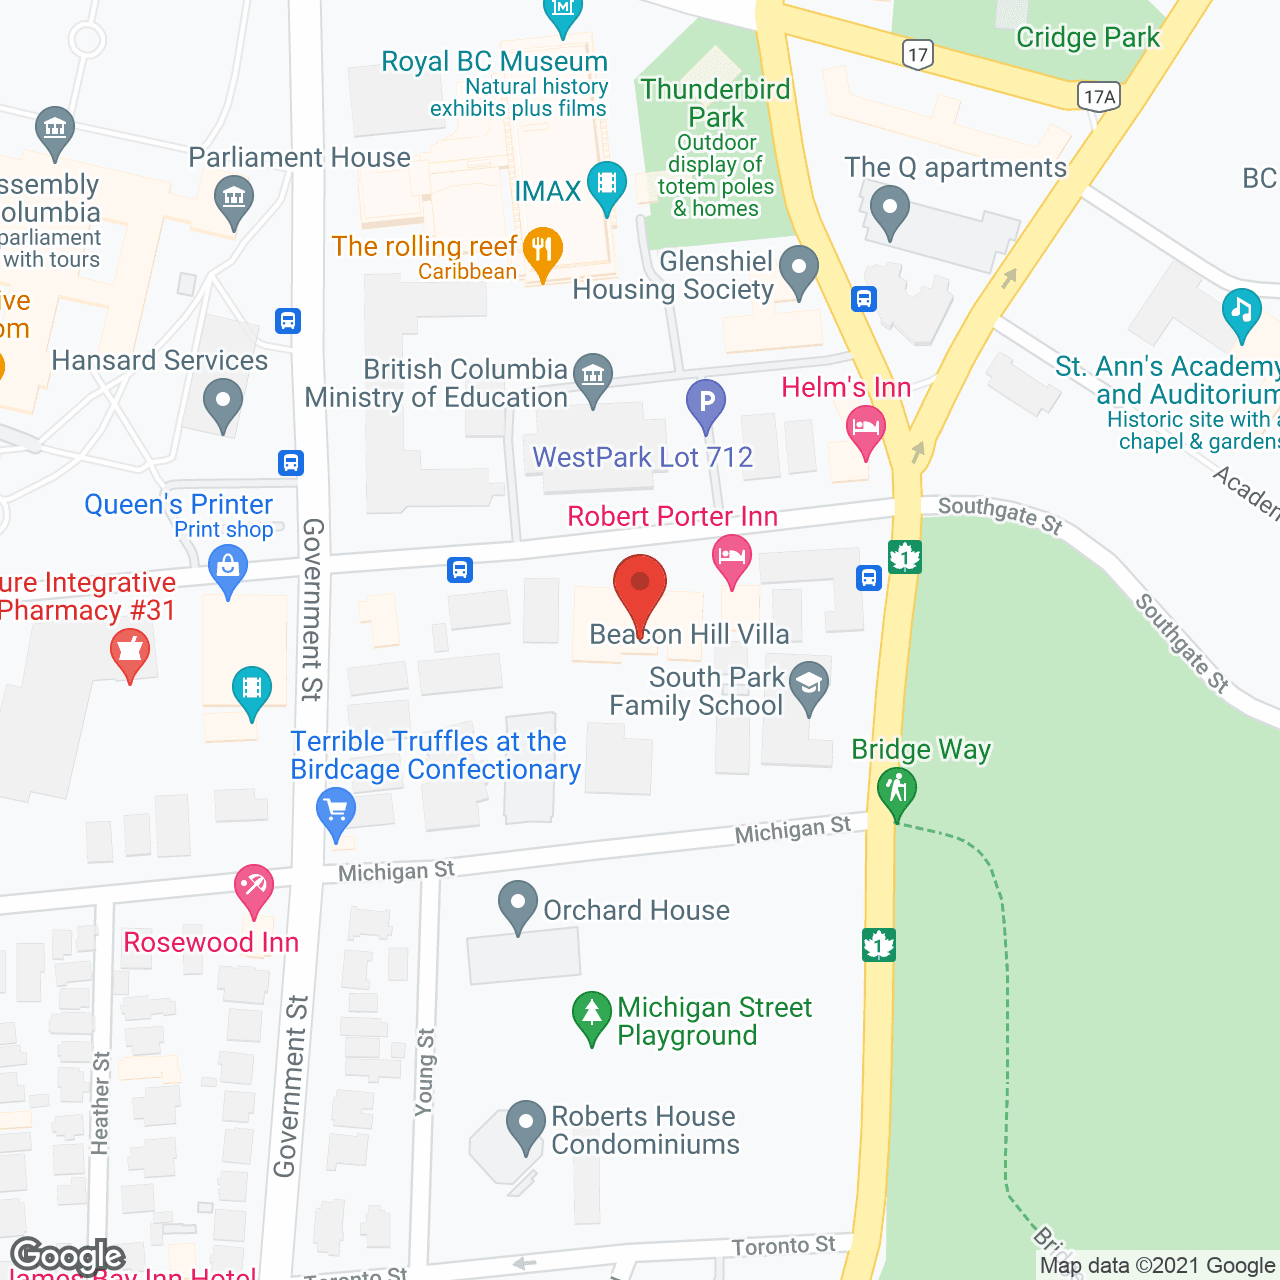 Beacon Hill Villa in google map